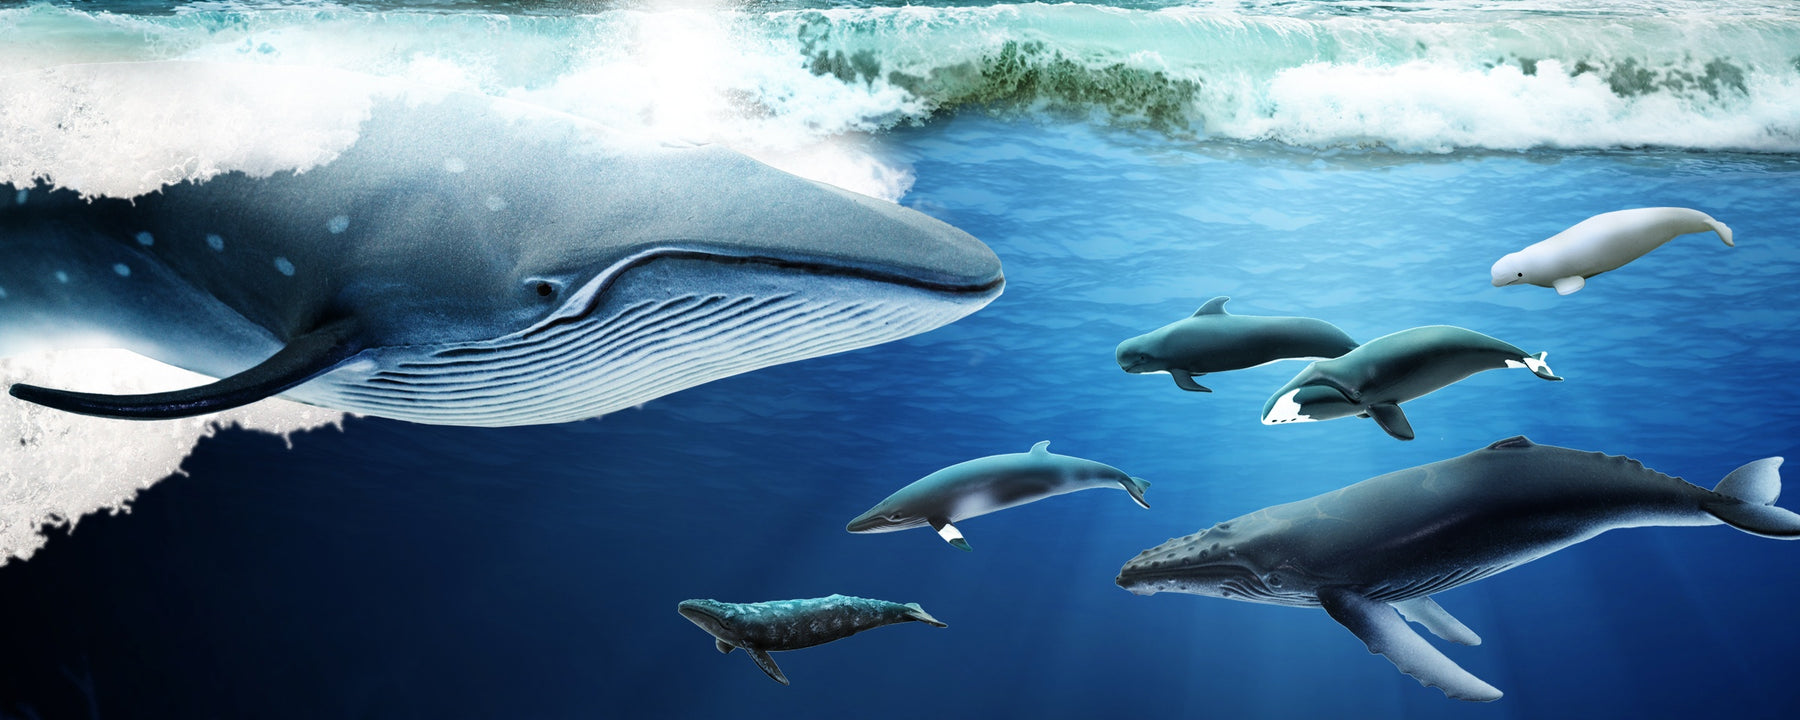 Get Wild! It's World Whale Day! - Safari Ltd®